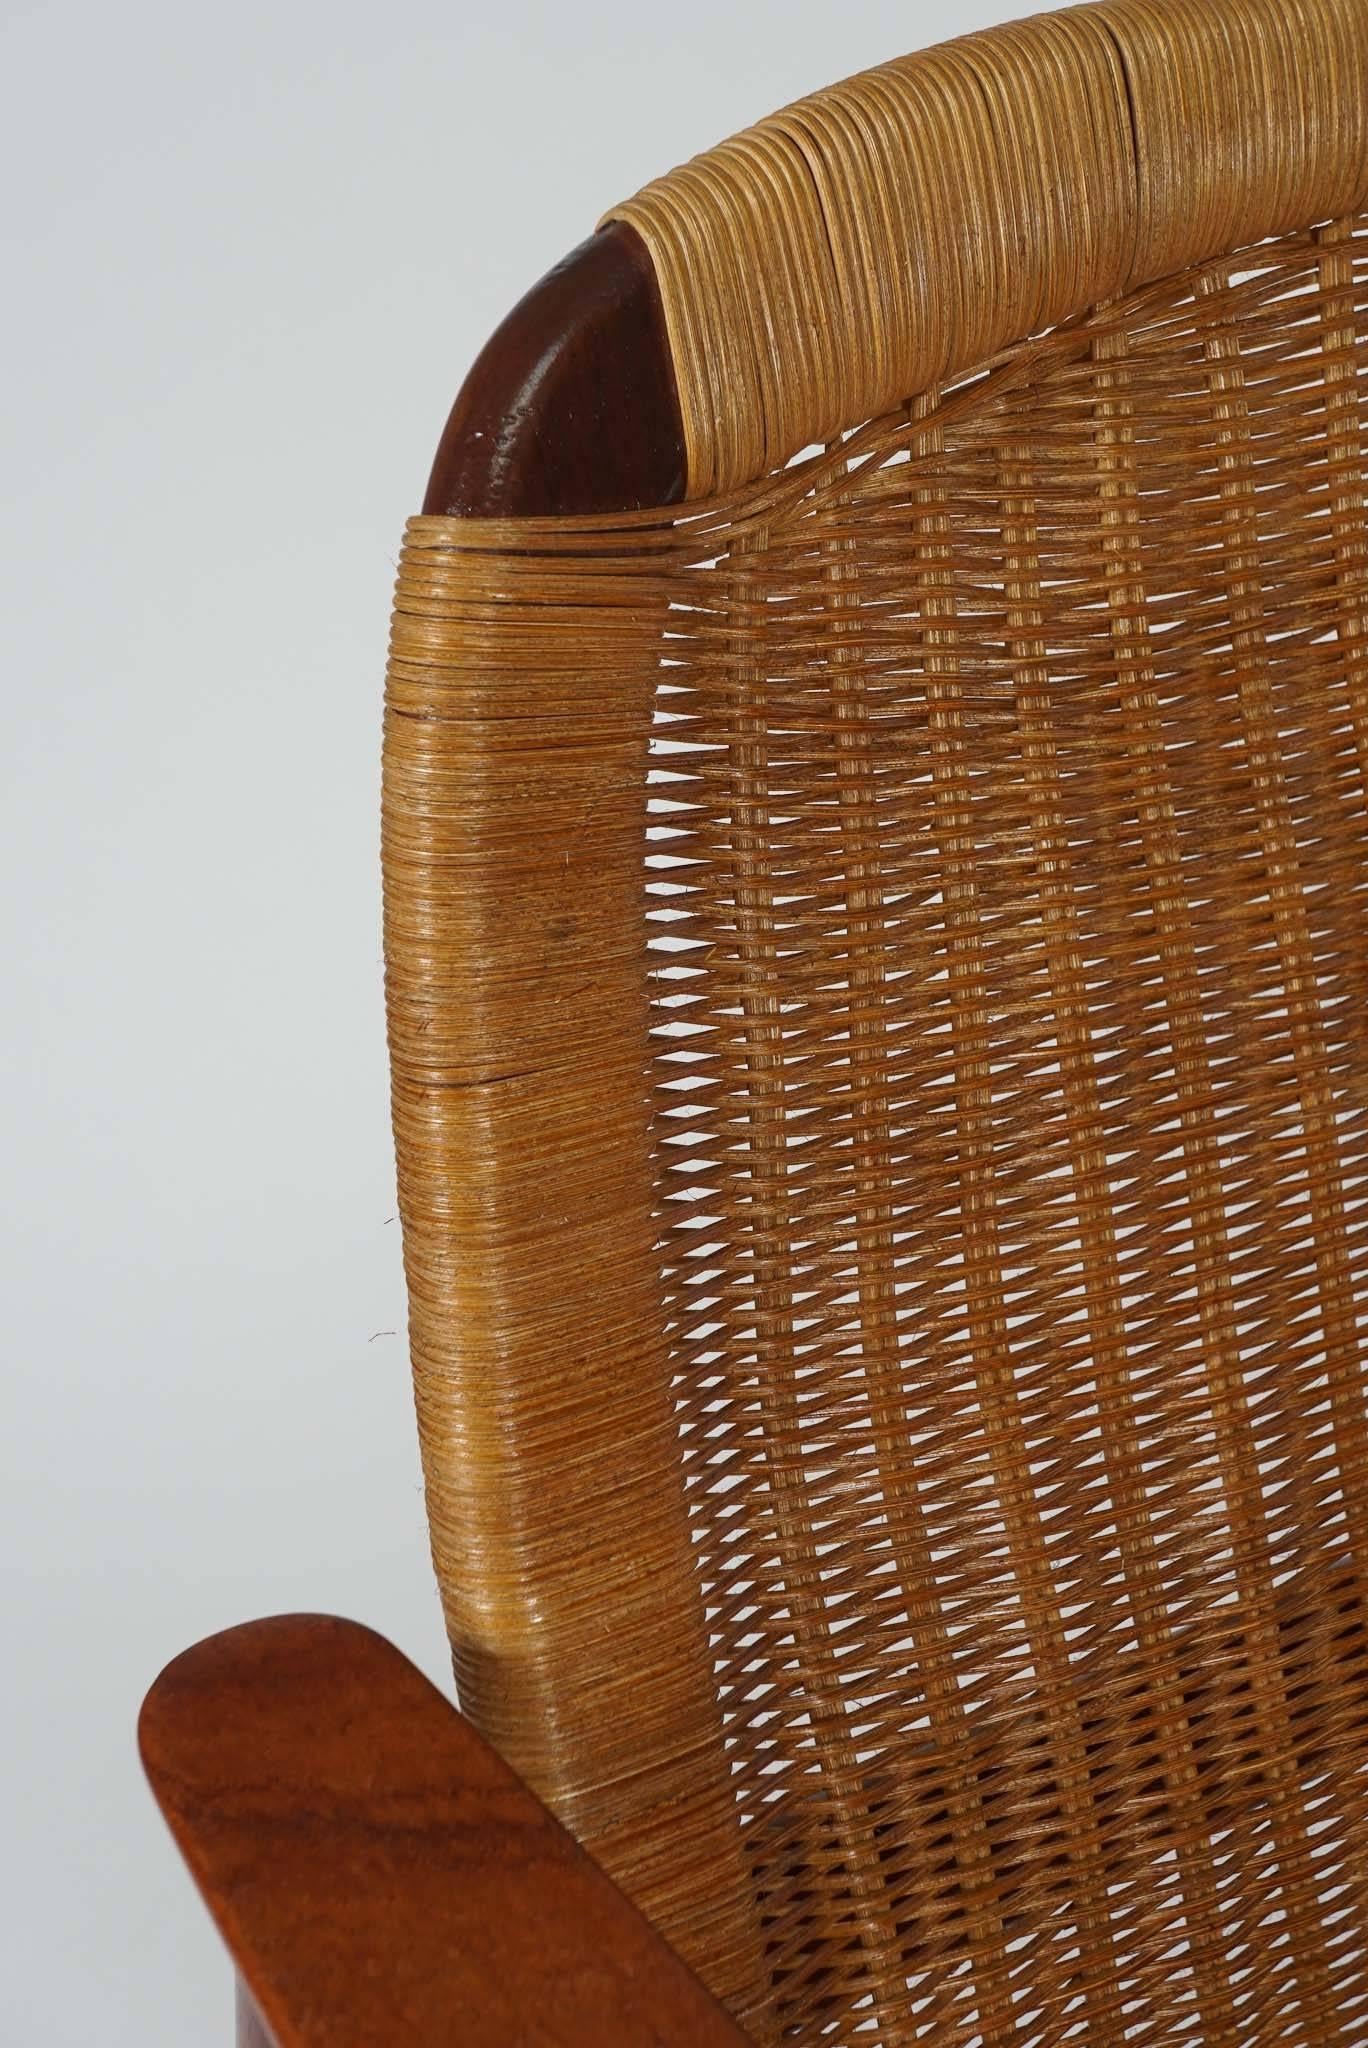 Upholstery Pair of Danish Modern Lounge Chairs